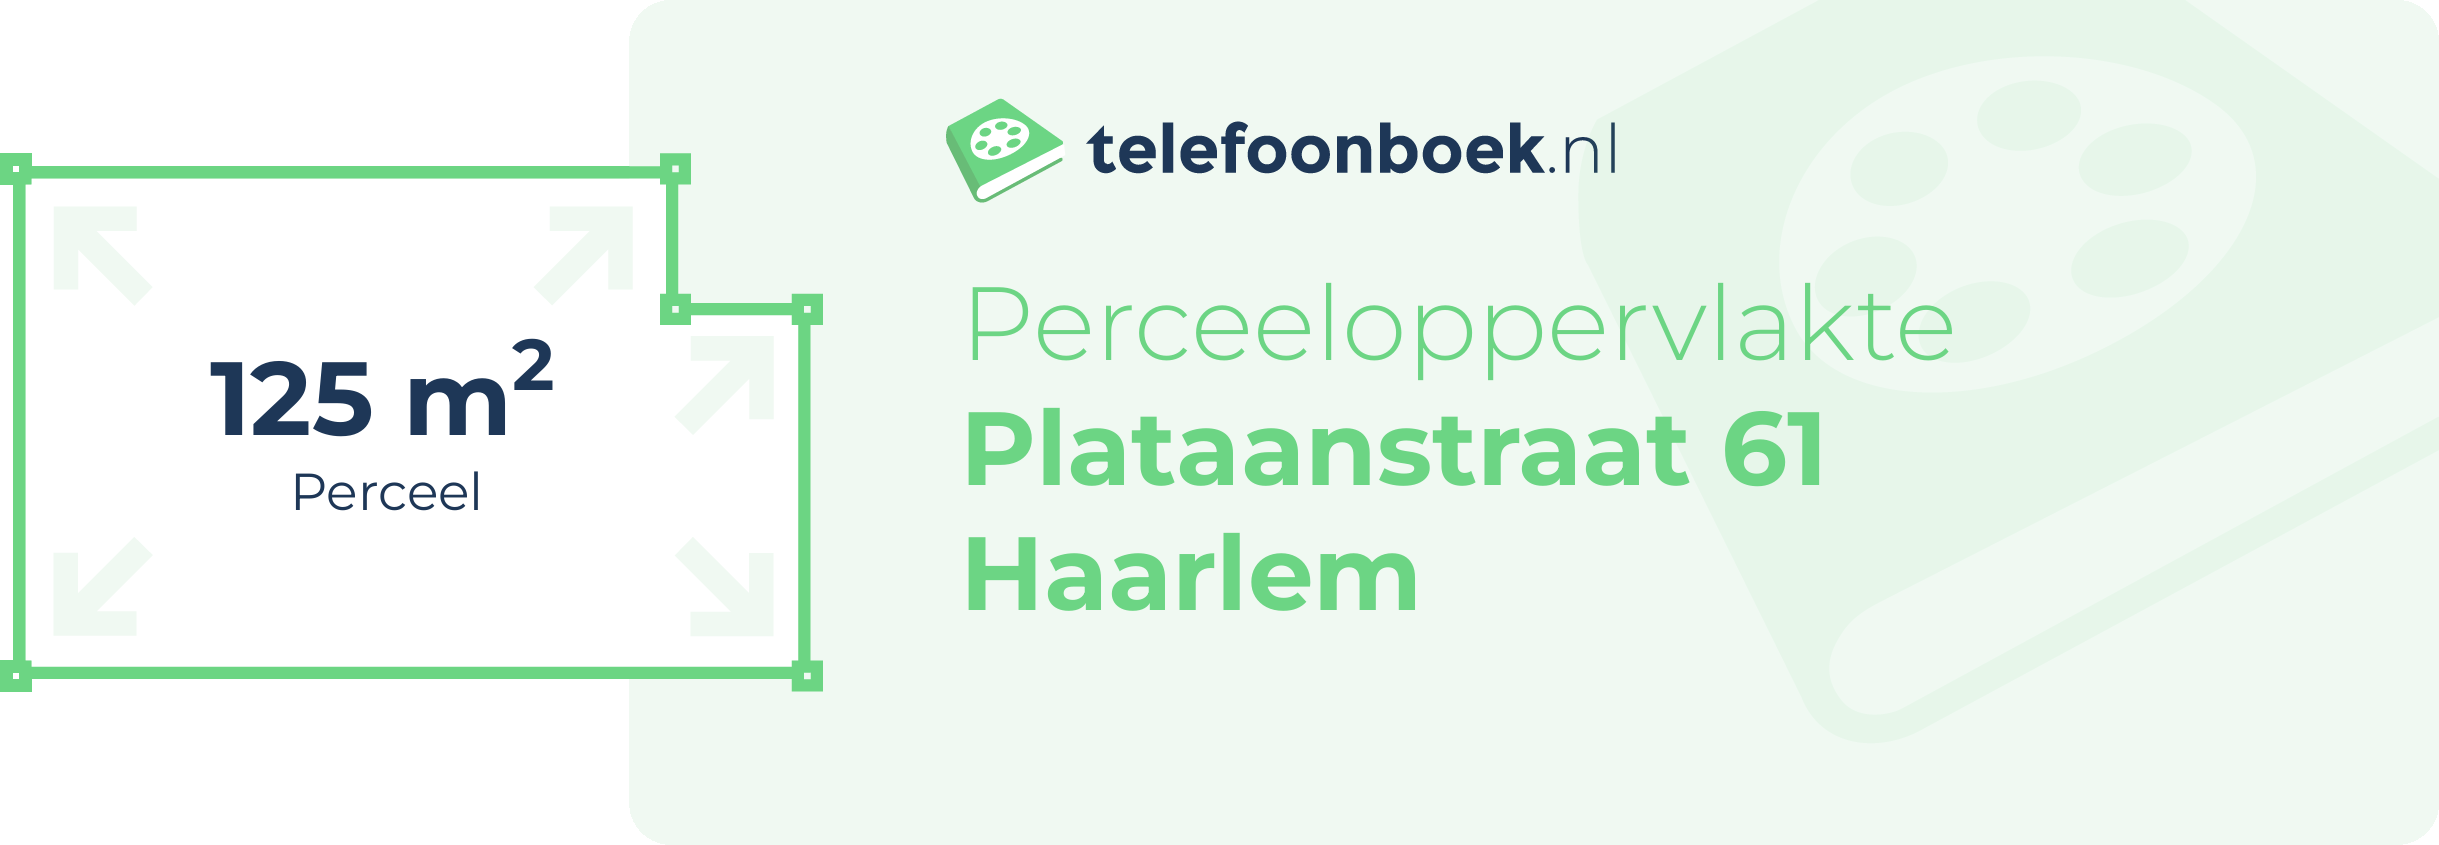 Perceeloppervlakte Plataanstraat 61 Haarlem